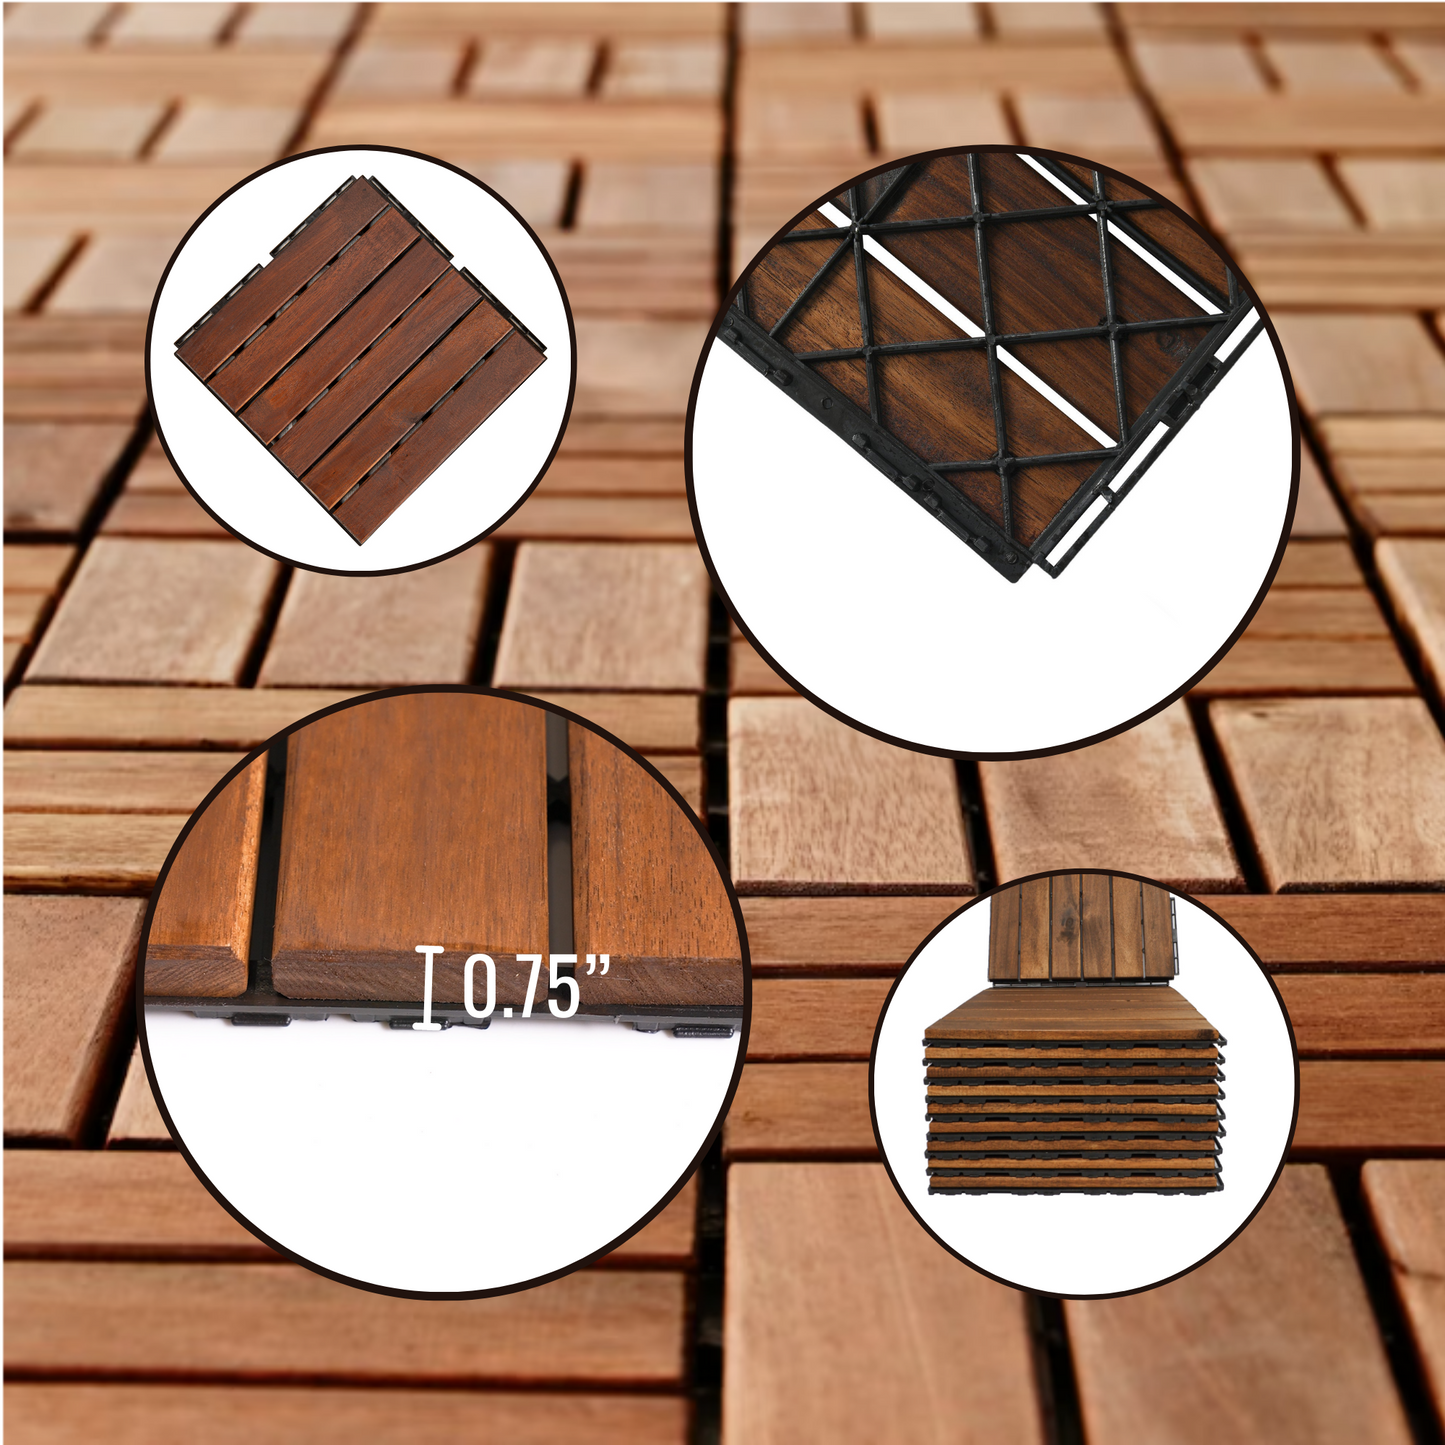 12" x 12" Square Acacia Wood Interlocking Flooring Tiles Striped Pattern Pack of 10 Tiles